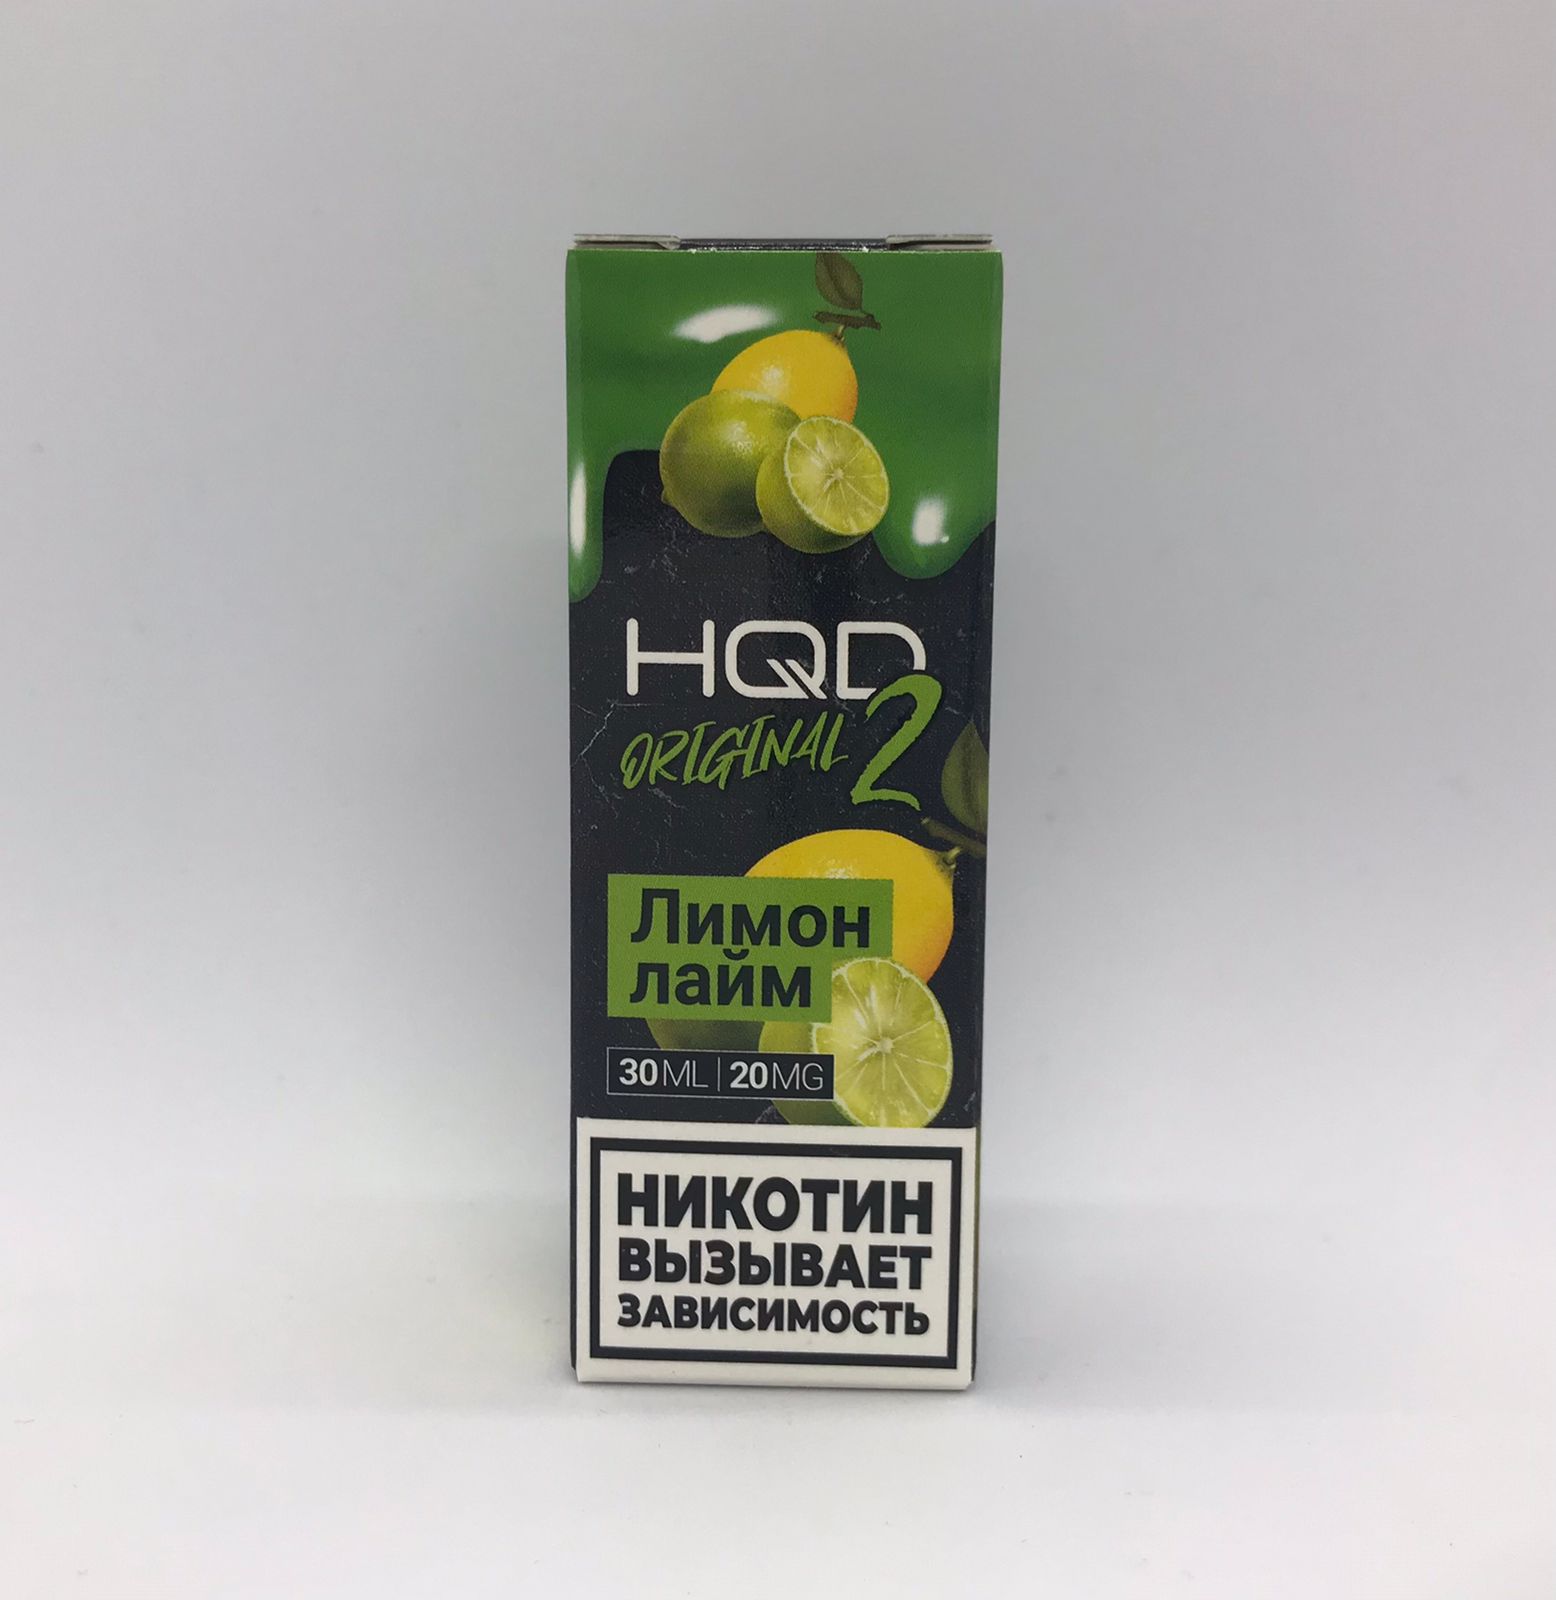 HQD ORIGINAL 2.0 / Лайм Лимон